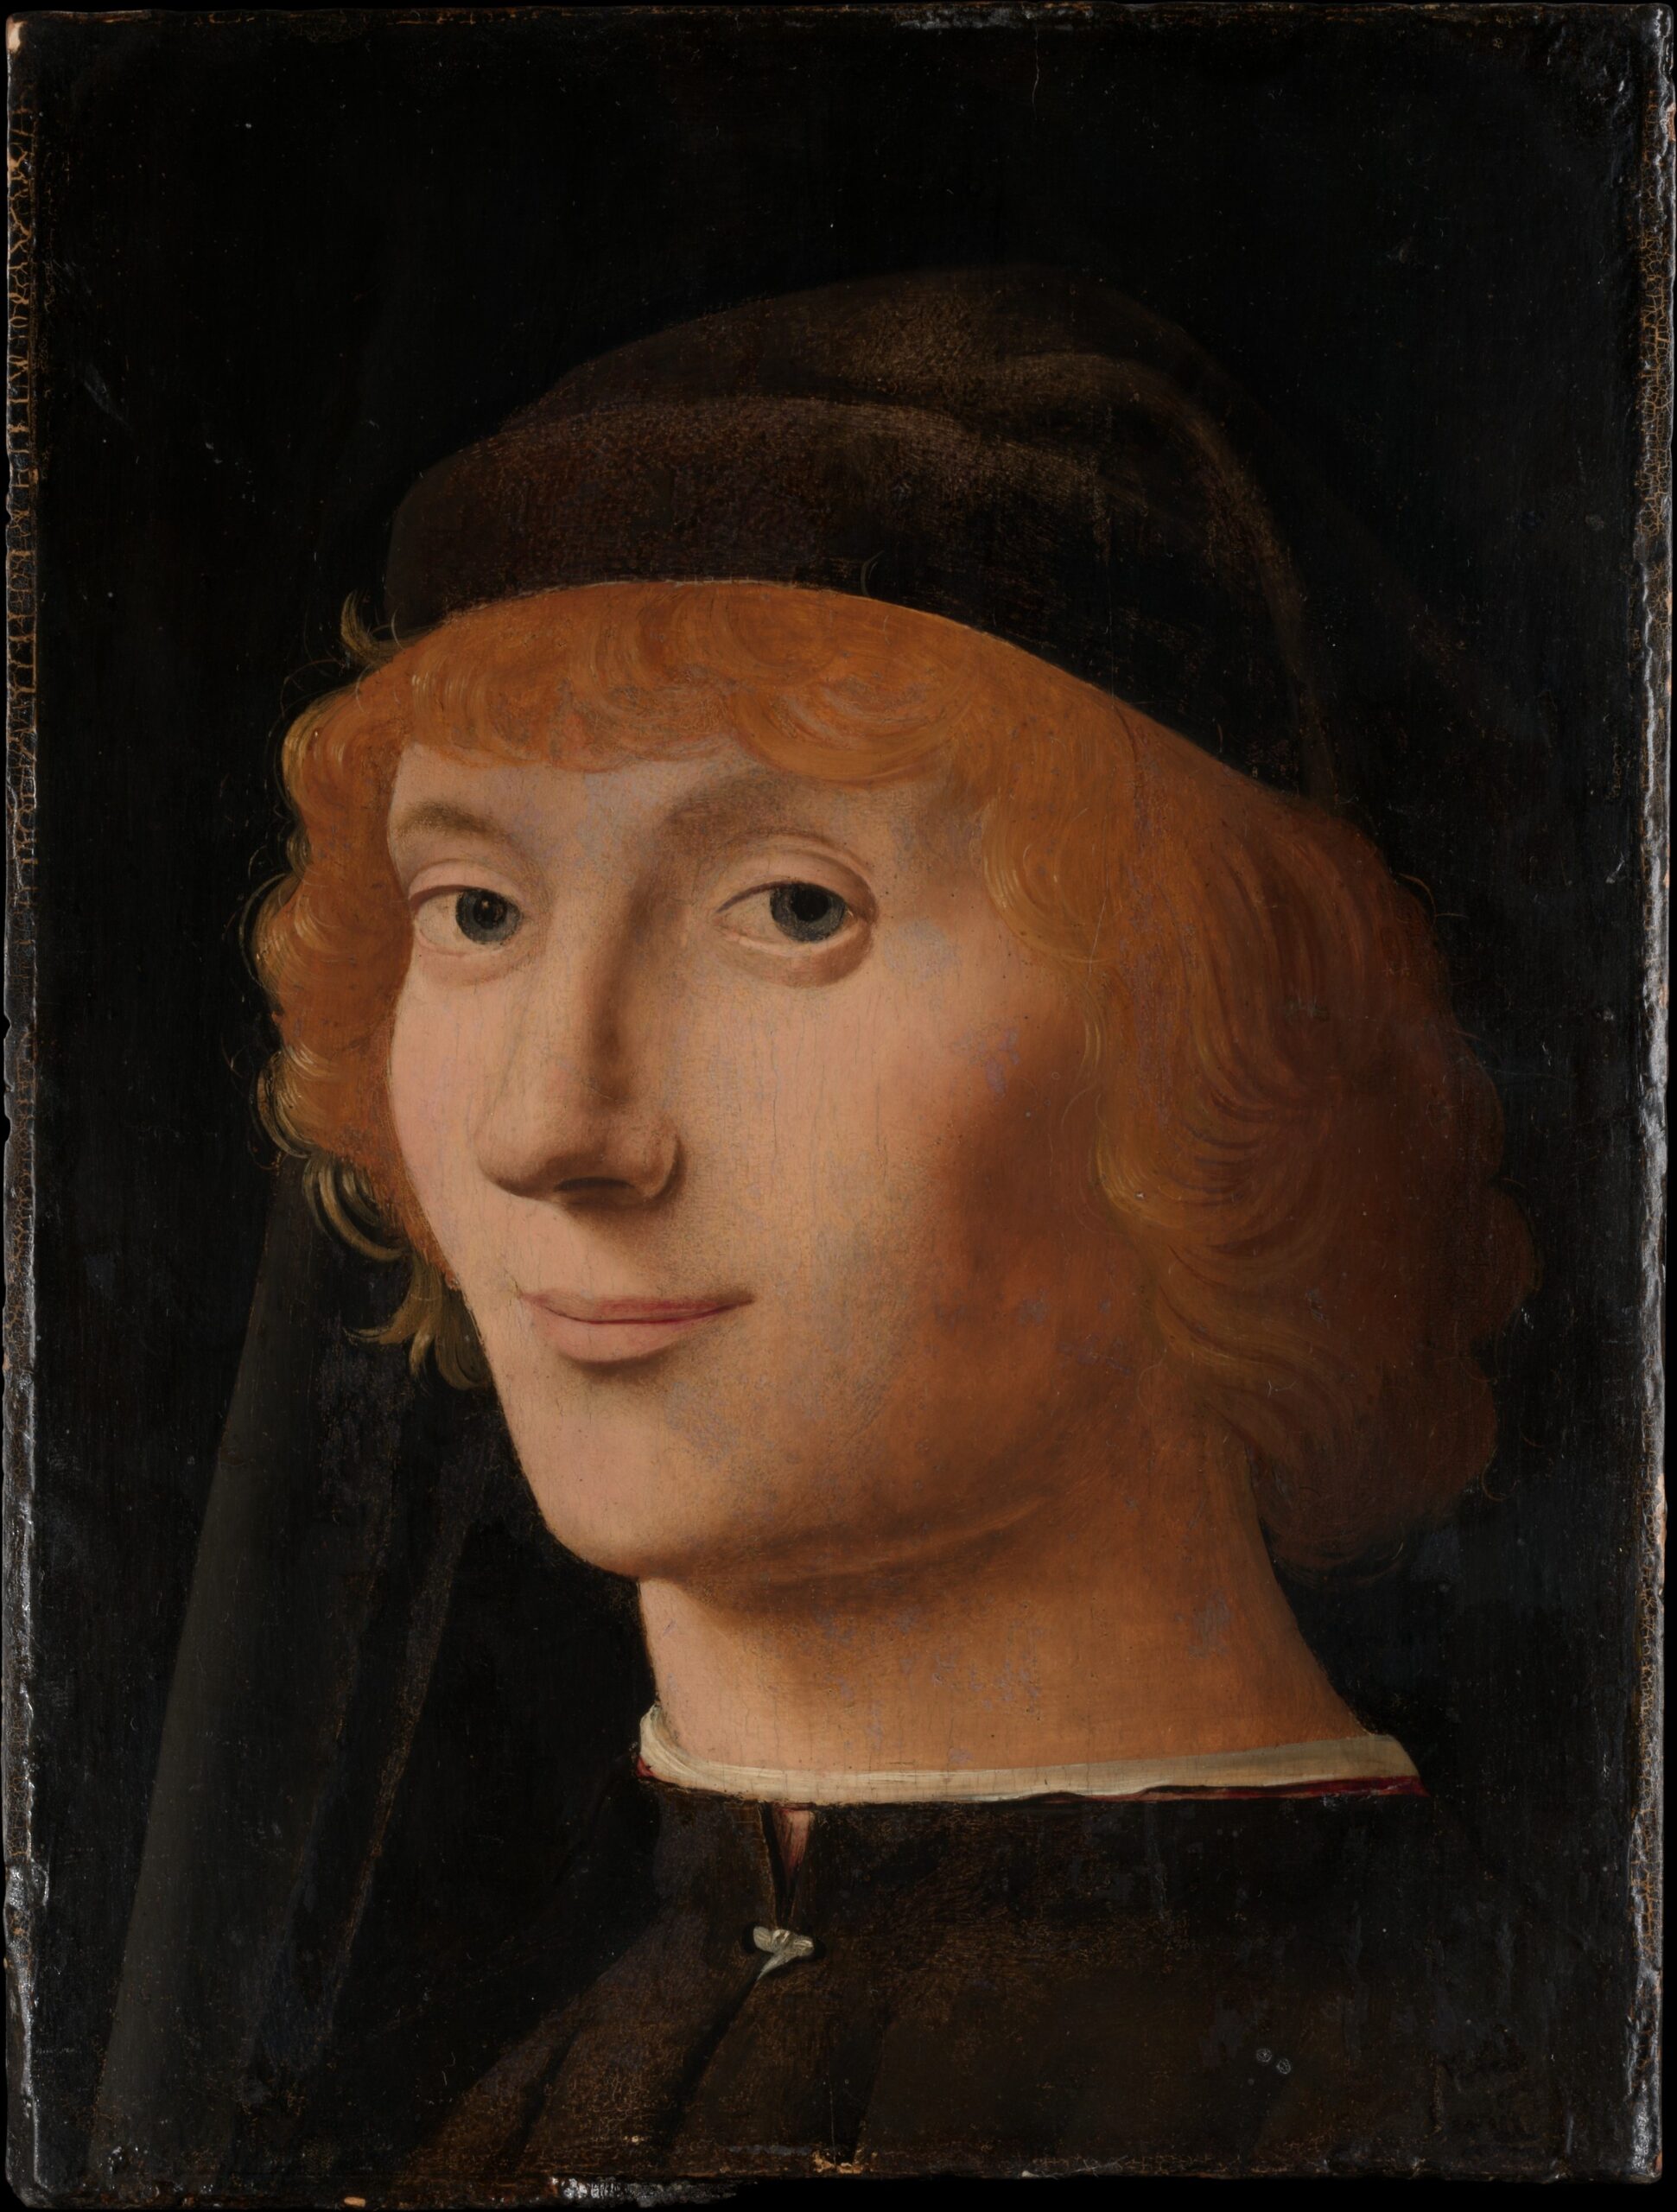 Антонелло да Мессина мужской портрет